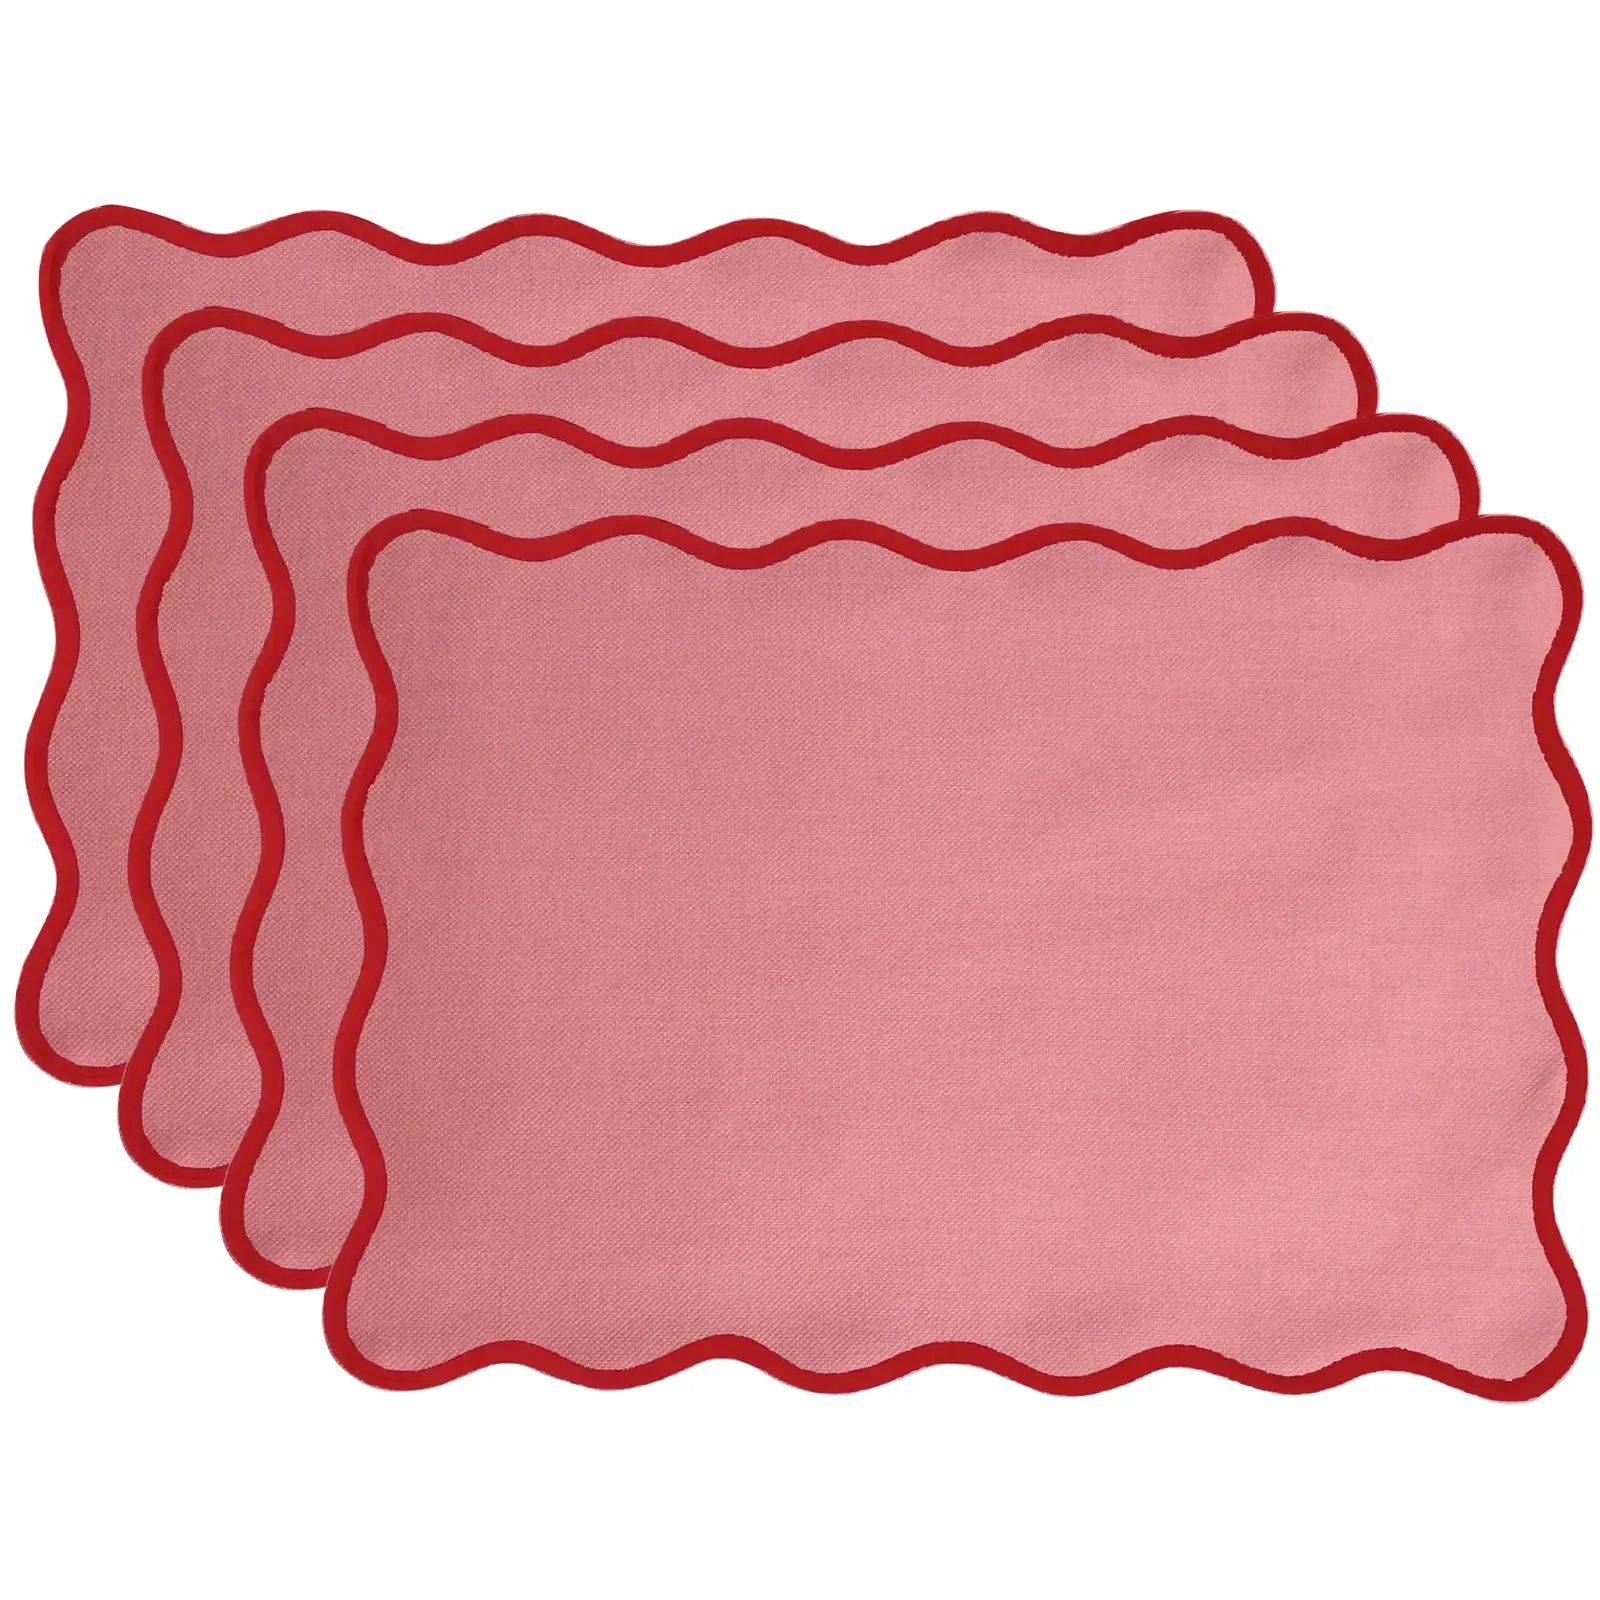 Handmade Red Scalloped Edge Placemats - Set of 4 | Chairish